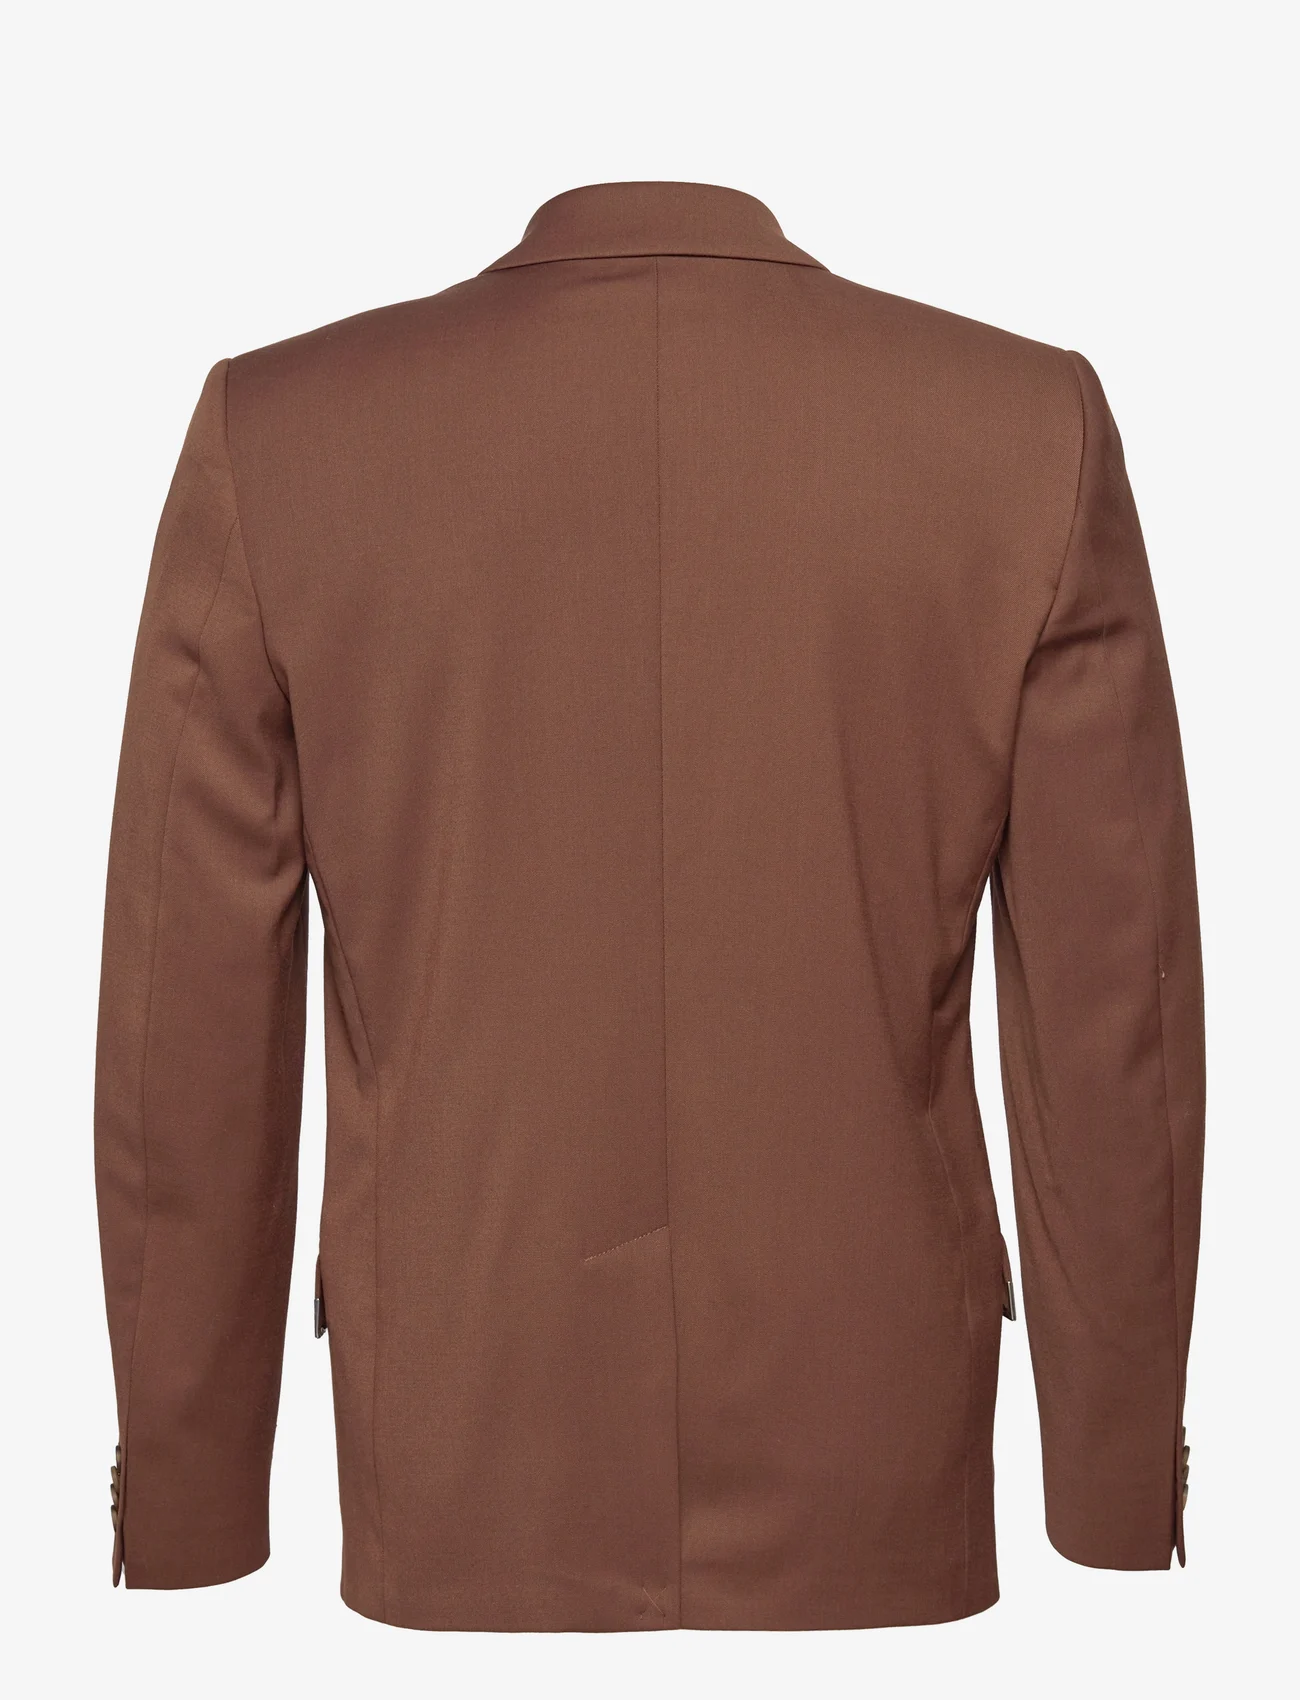 HAN Kjøbenhavn - Single Suit Blazer - dwurzędowe blezery - brown - 1